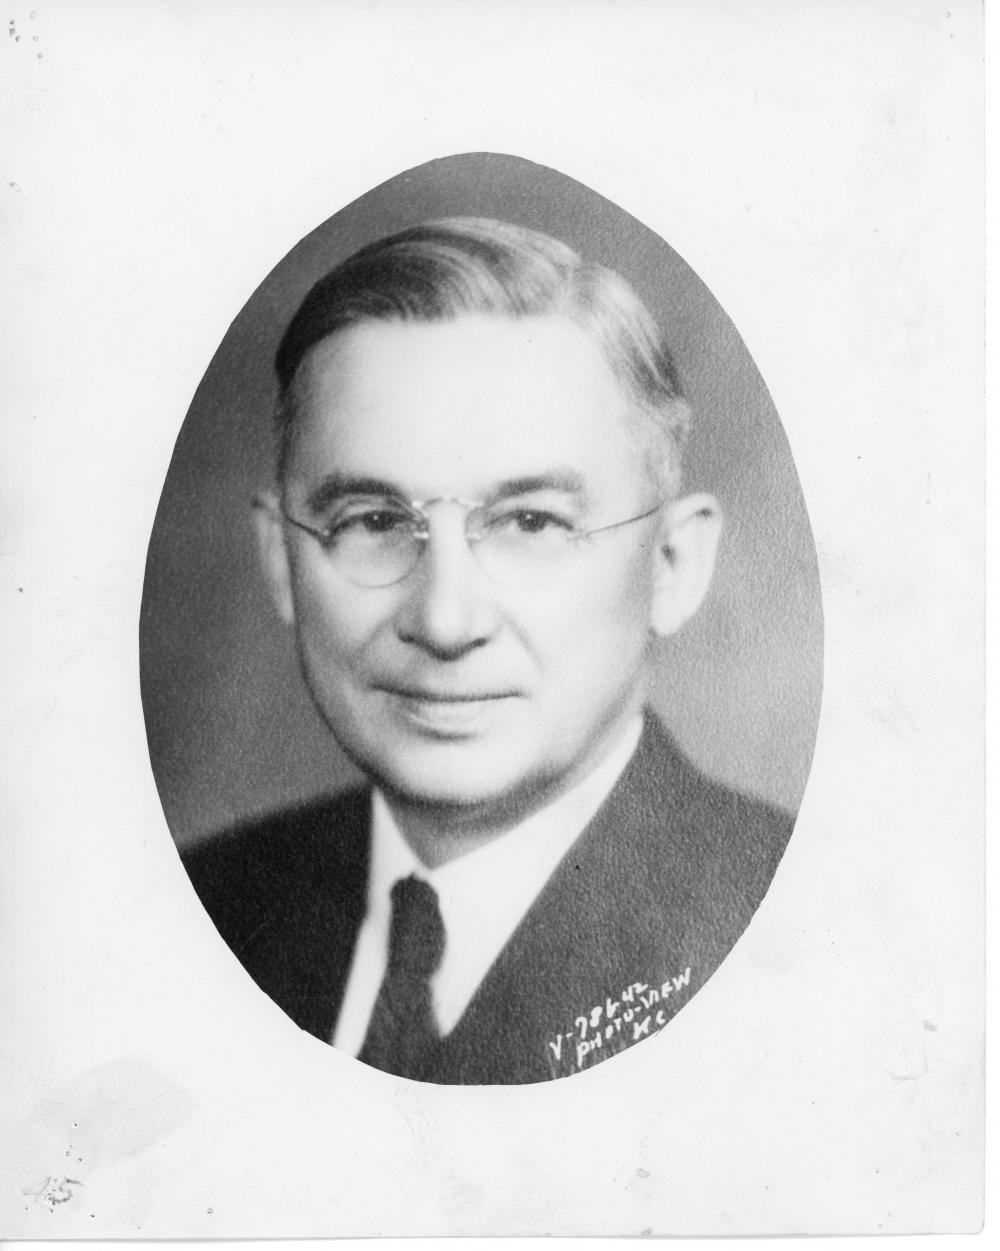 John B. Gage won the mayoral election of 1940